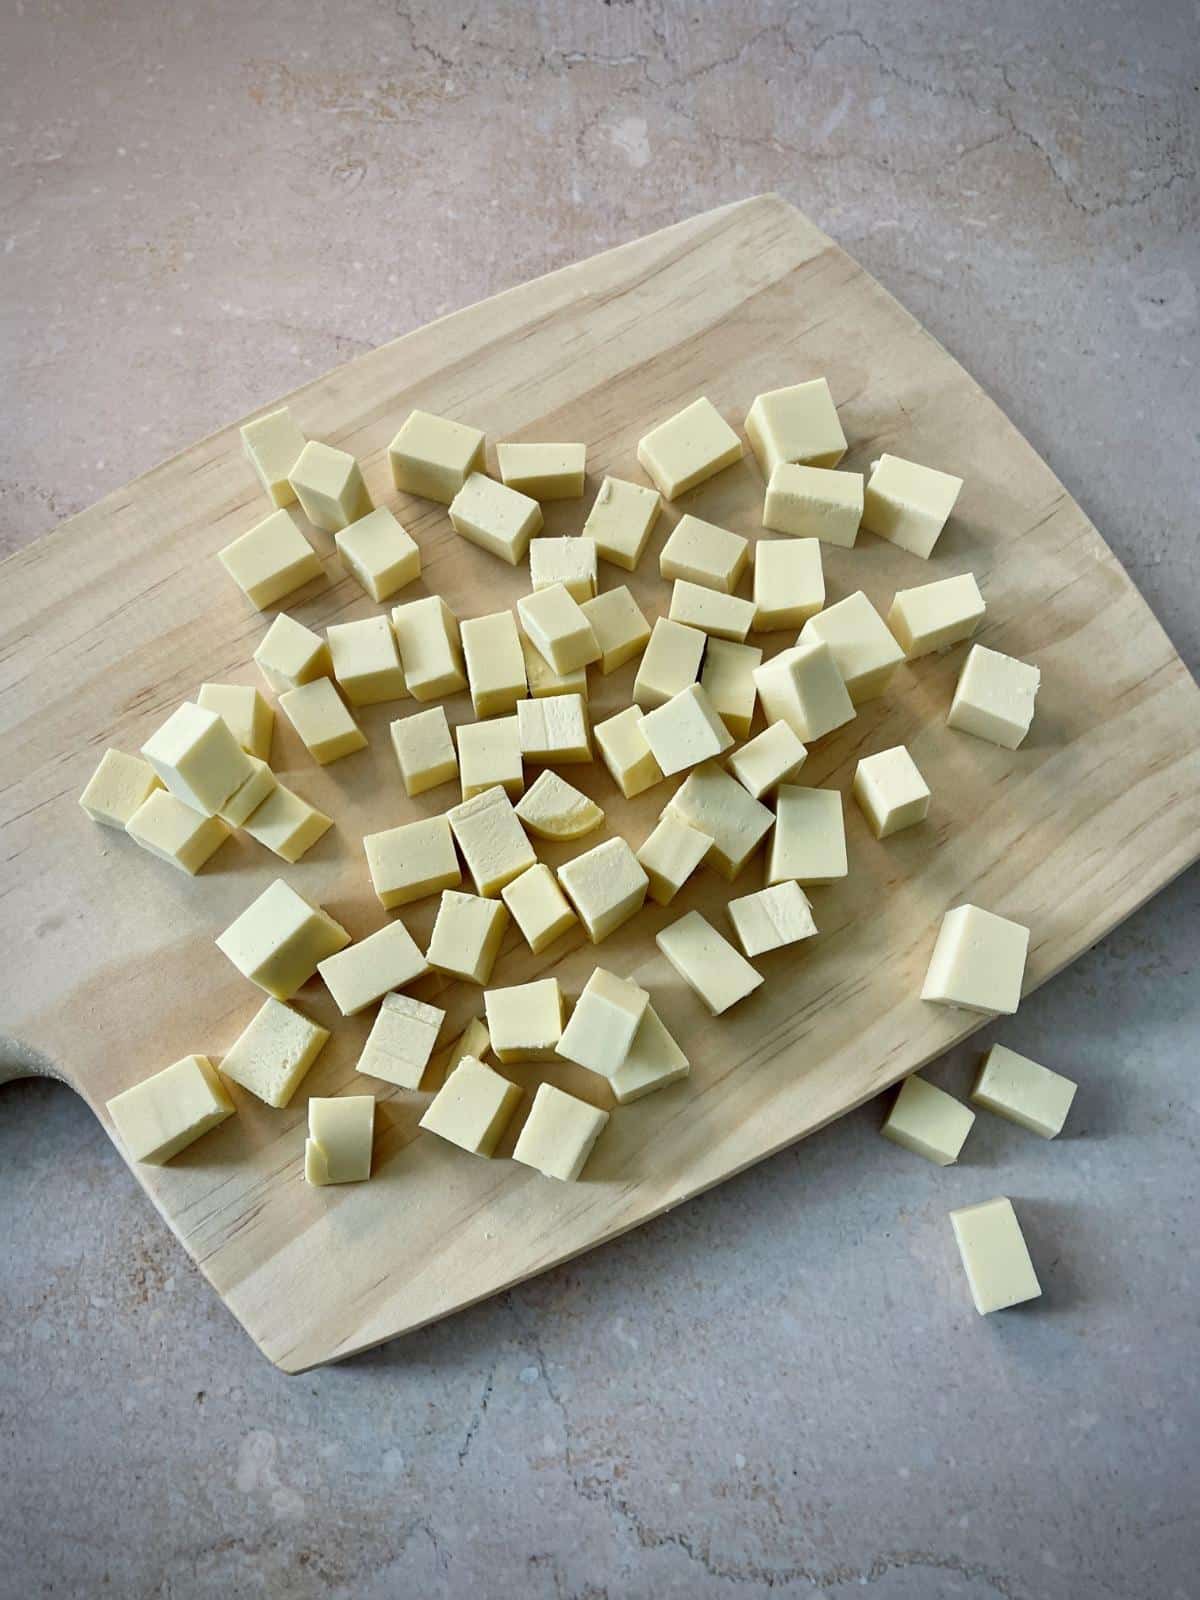 Cubed vegan cheese.